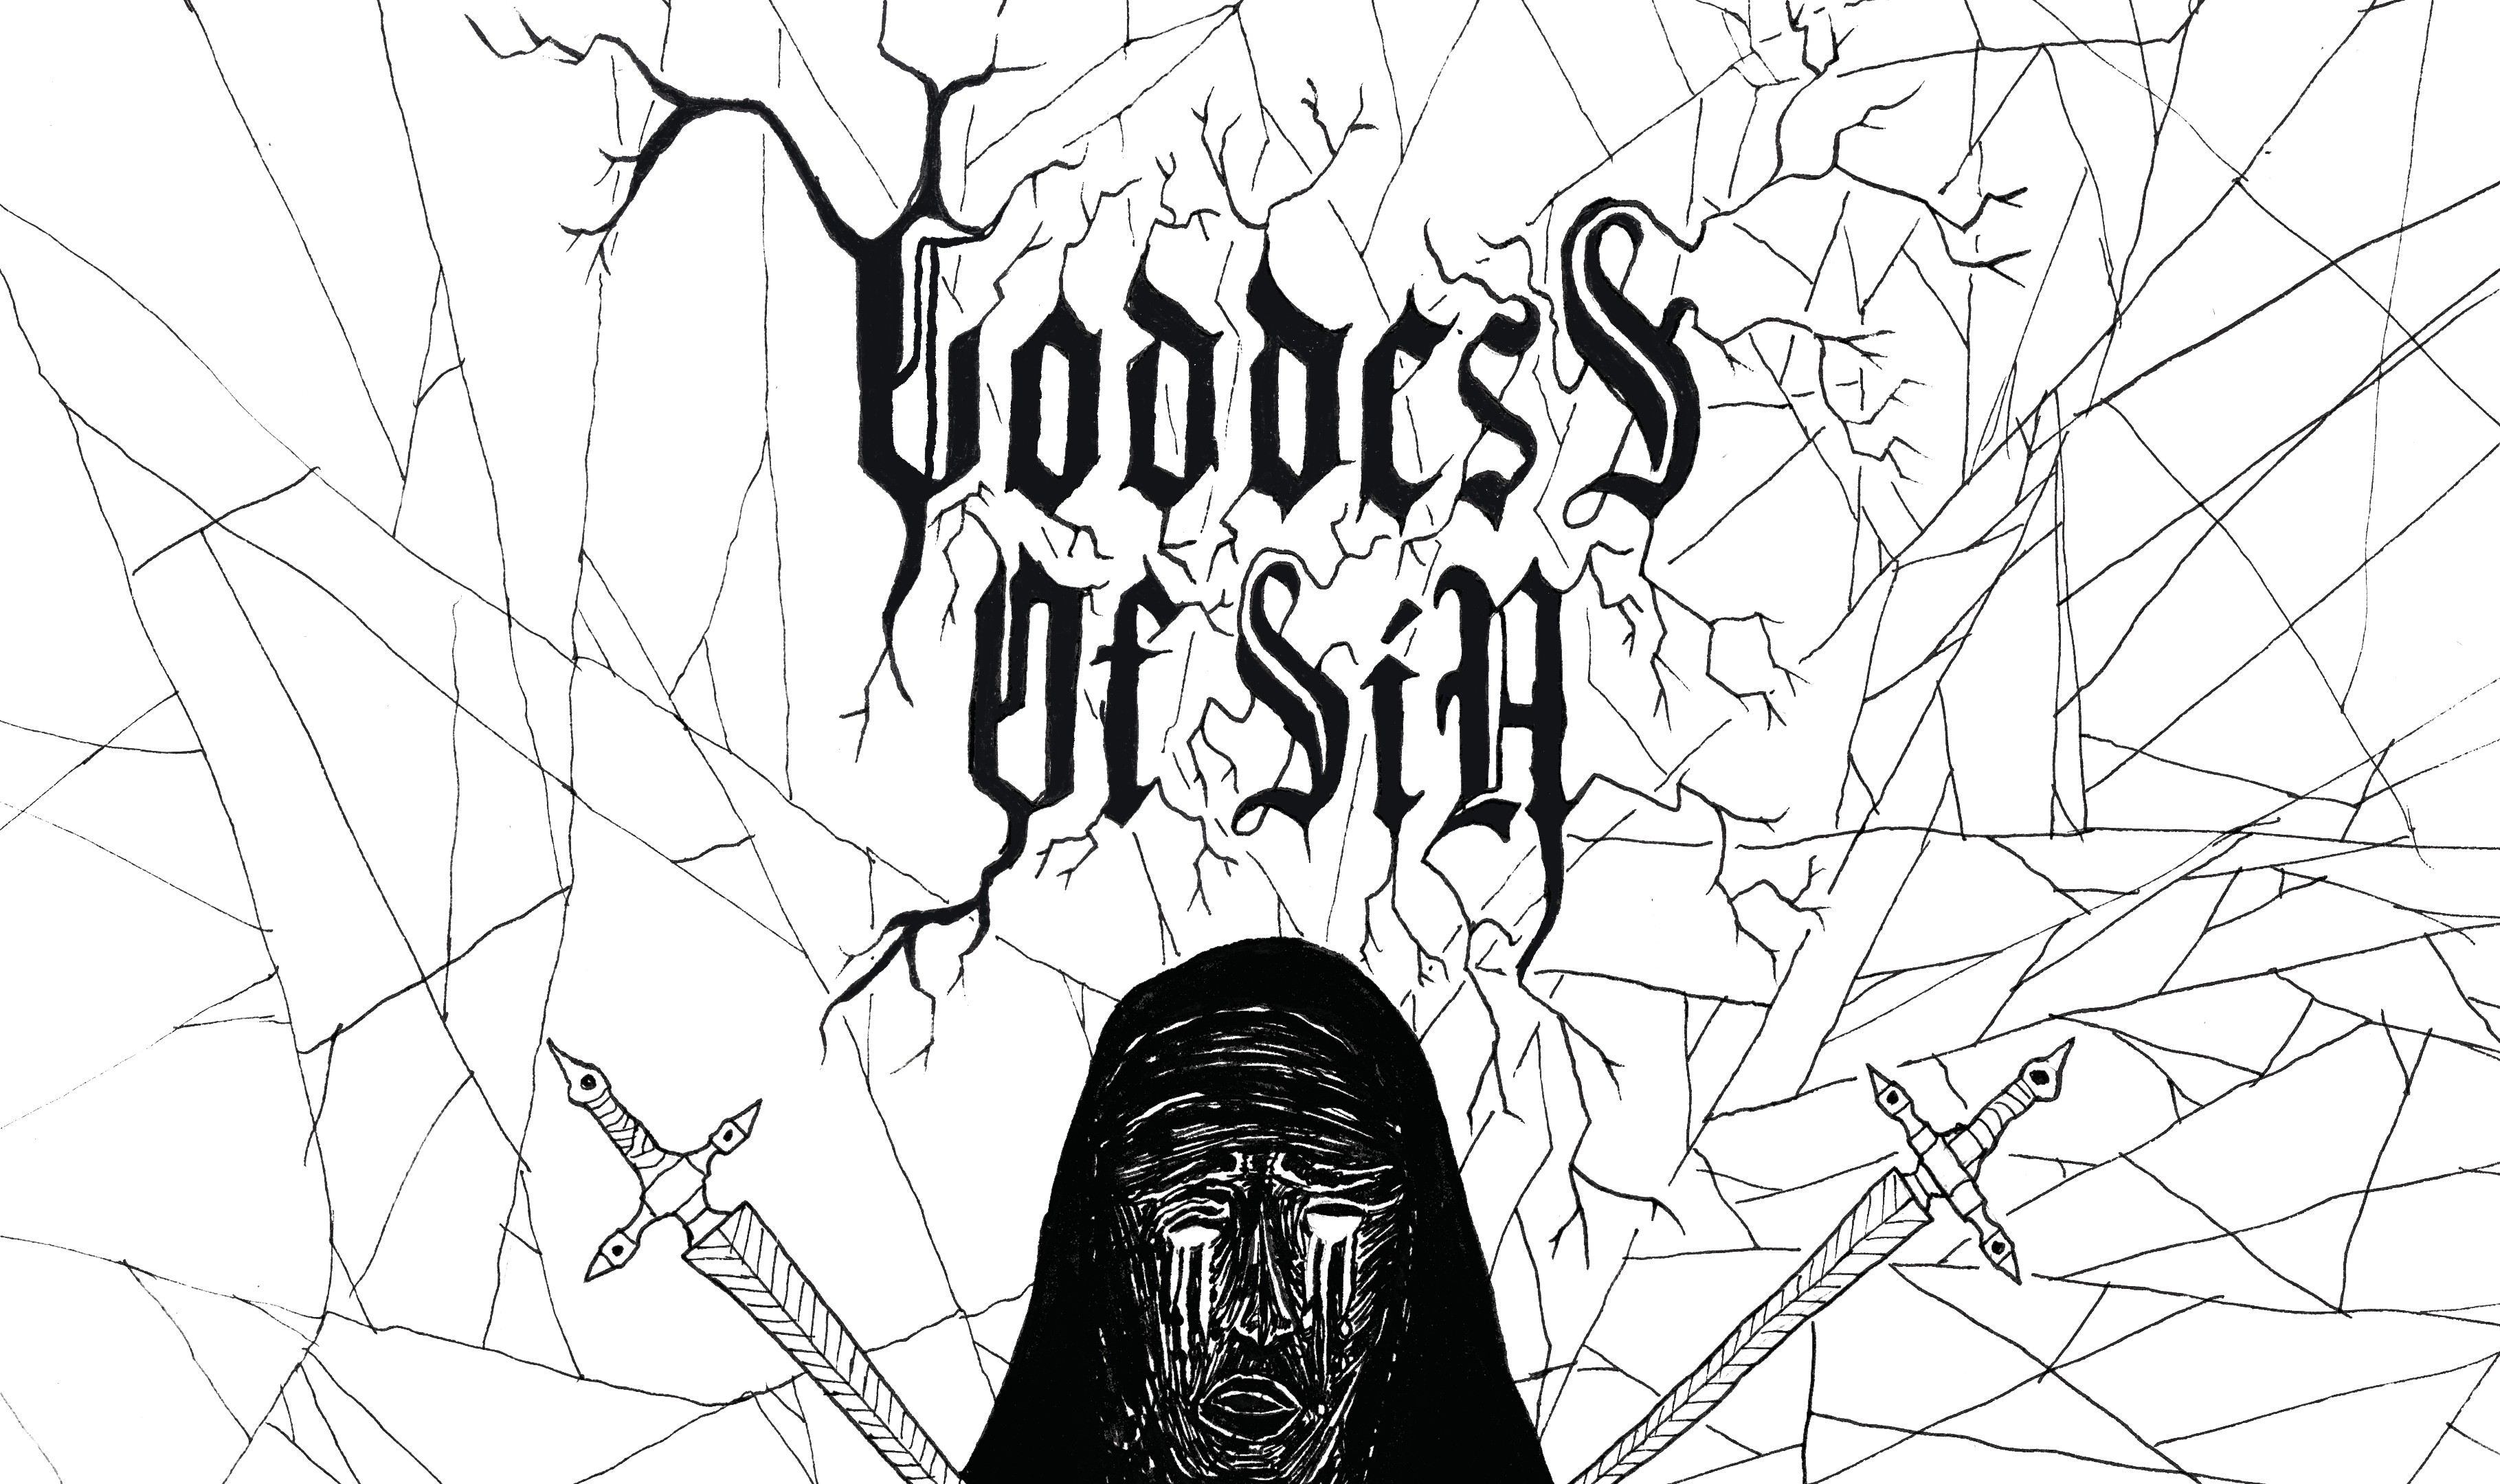 GODDESS OF SIN - A Digital Poetry Zine